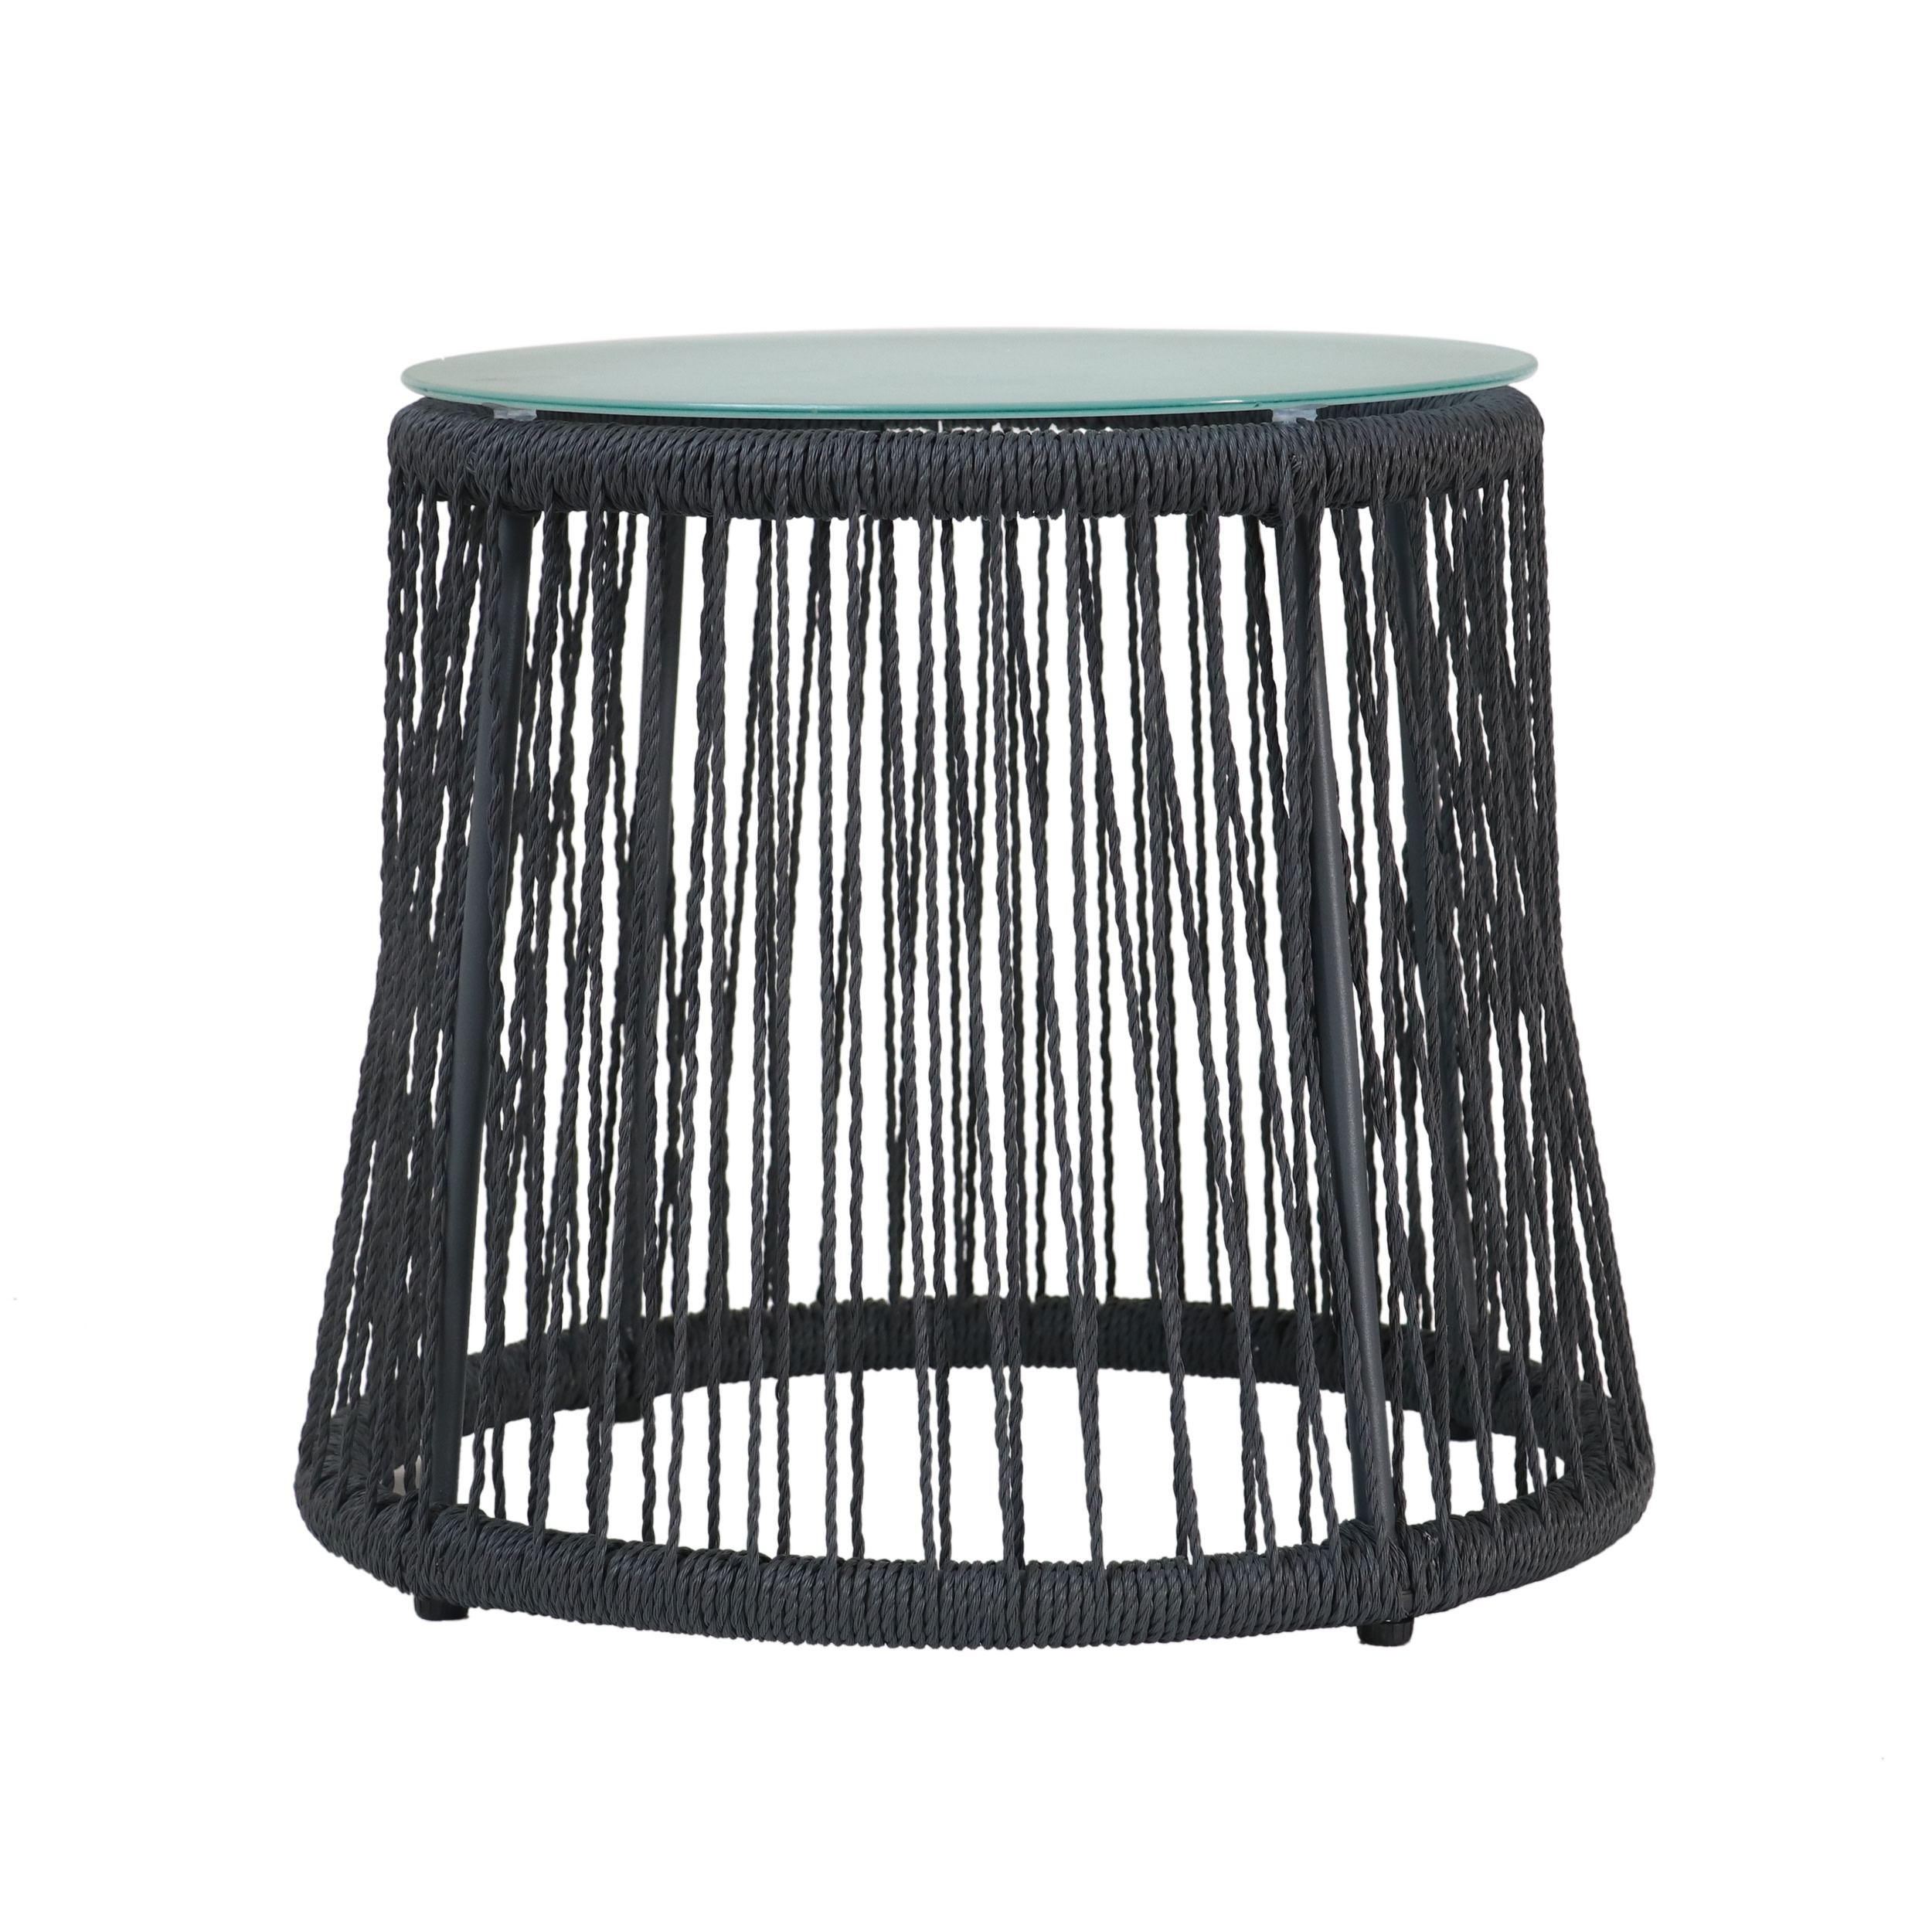 GDF Studio Sedona Indoor/Outdoor Rope and Glass Side Table, Dark Gray - image 1 of 8